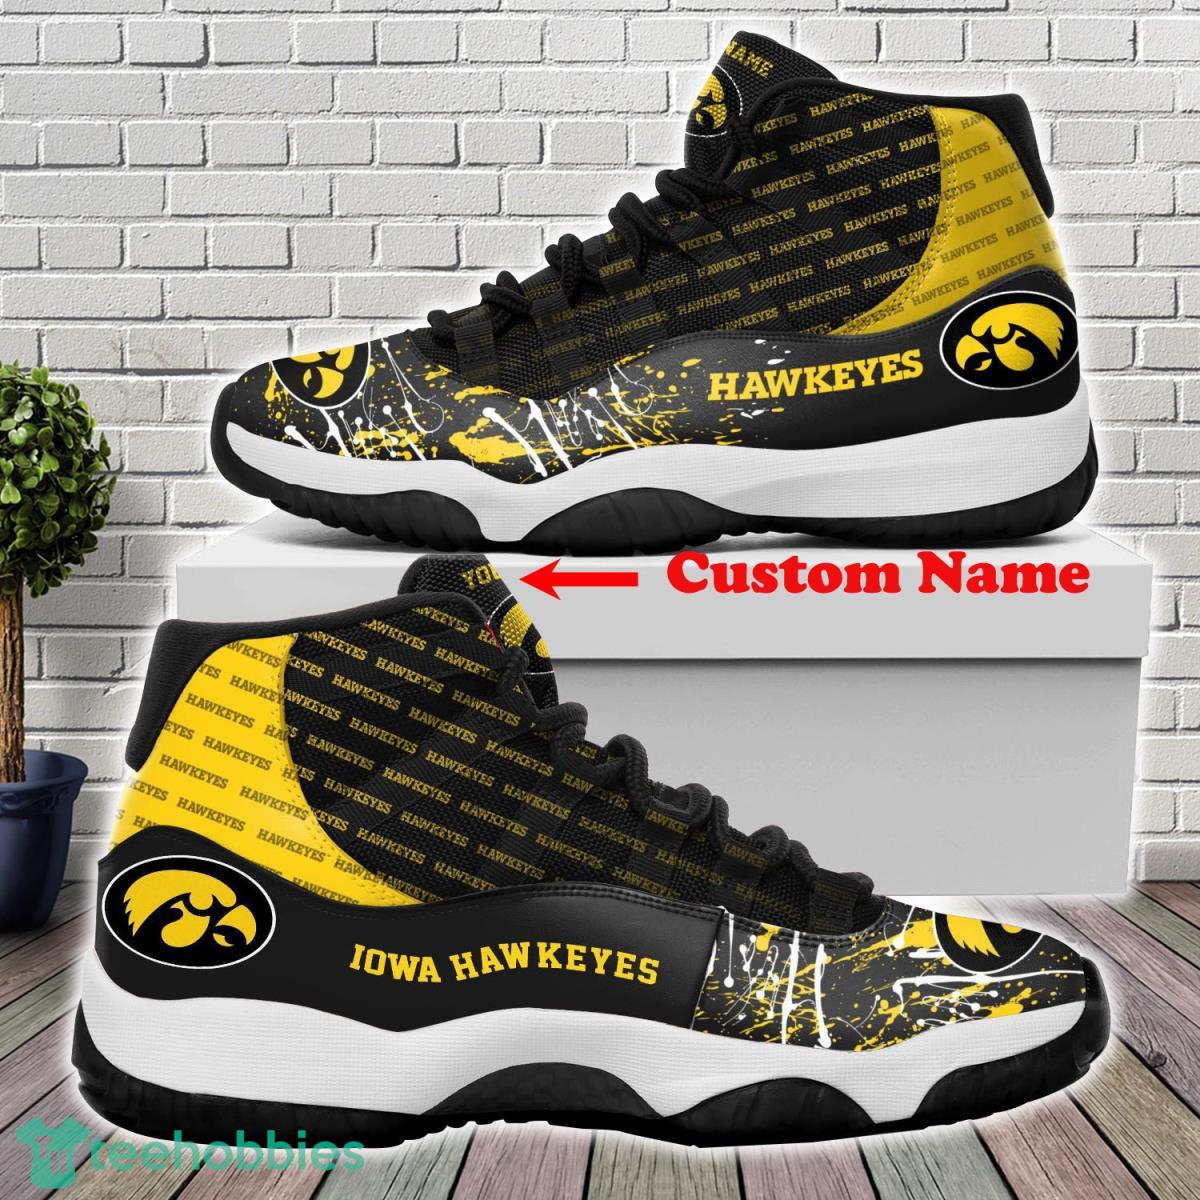 Iowa Hawkeyes Custom Name Air Jordan 11 Sneakers For Fans Product Photo 1